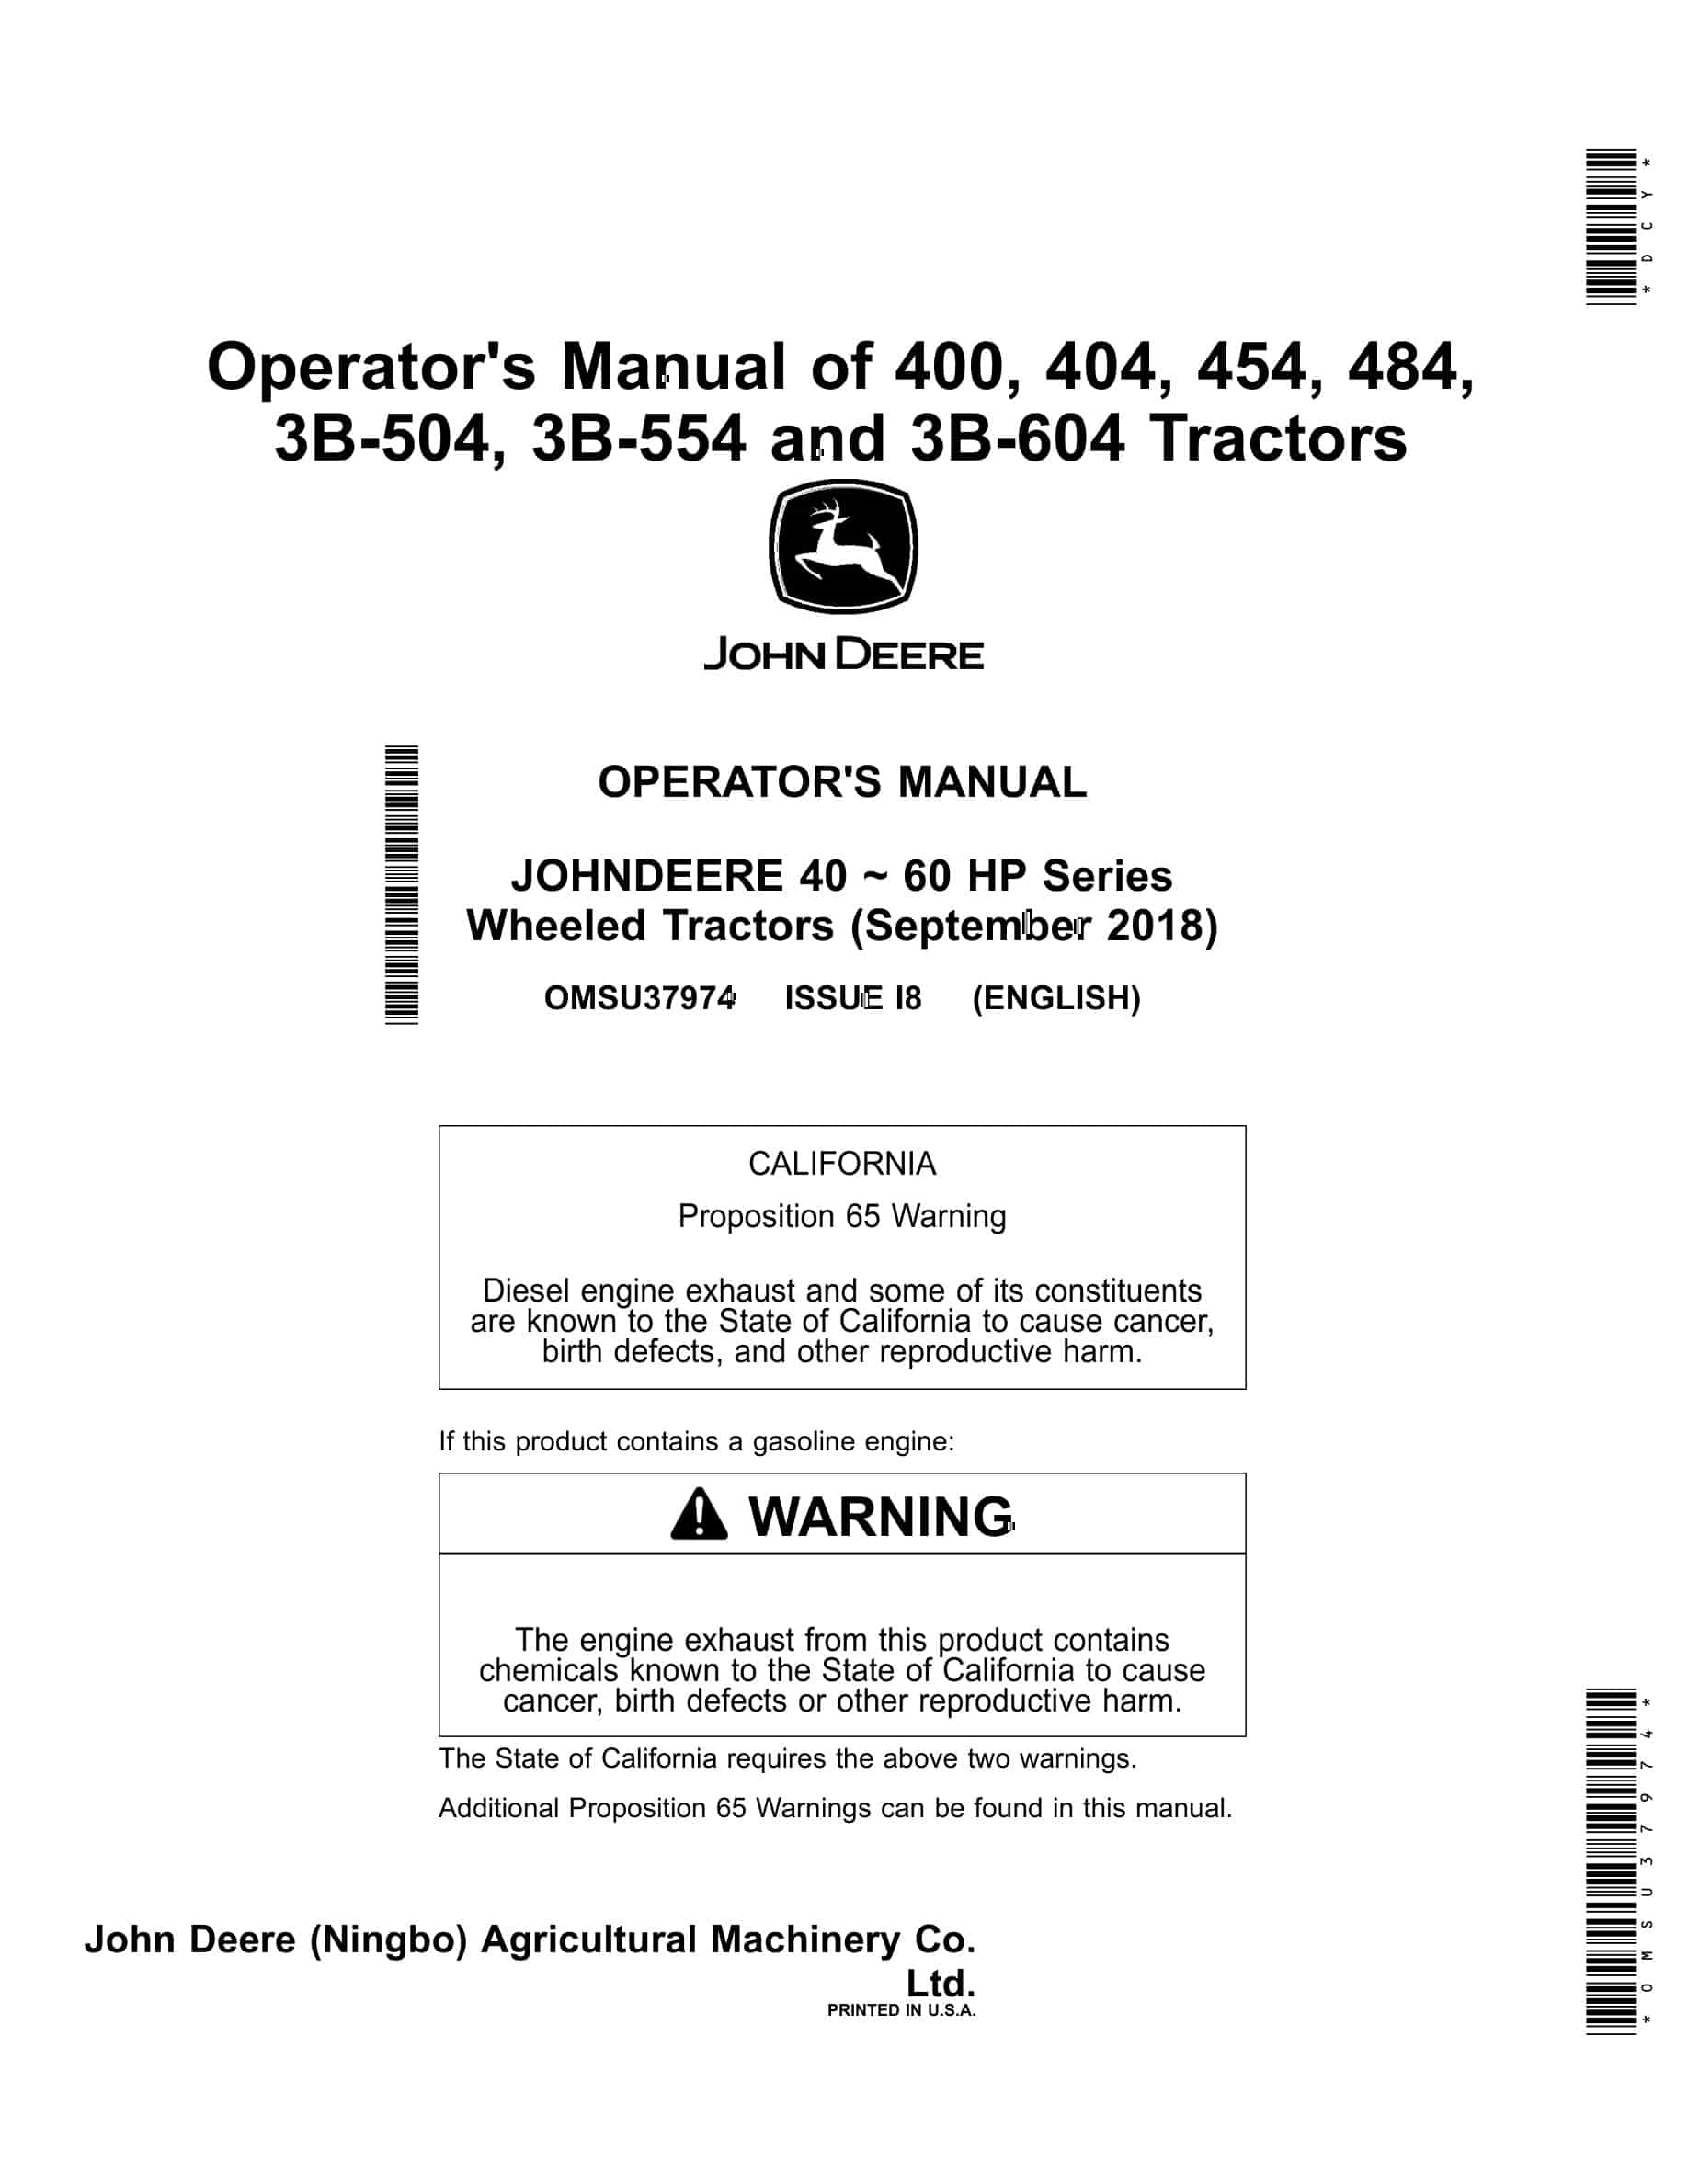 John Deere 400, 404, 454, 484, 3b-504, 3b-554 And 3b-604 Tractors Operator Manuals OMSU37974-1